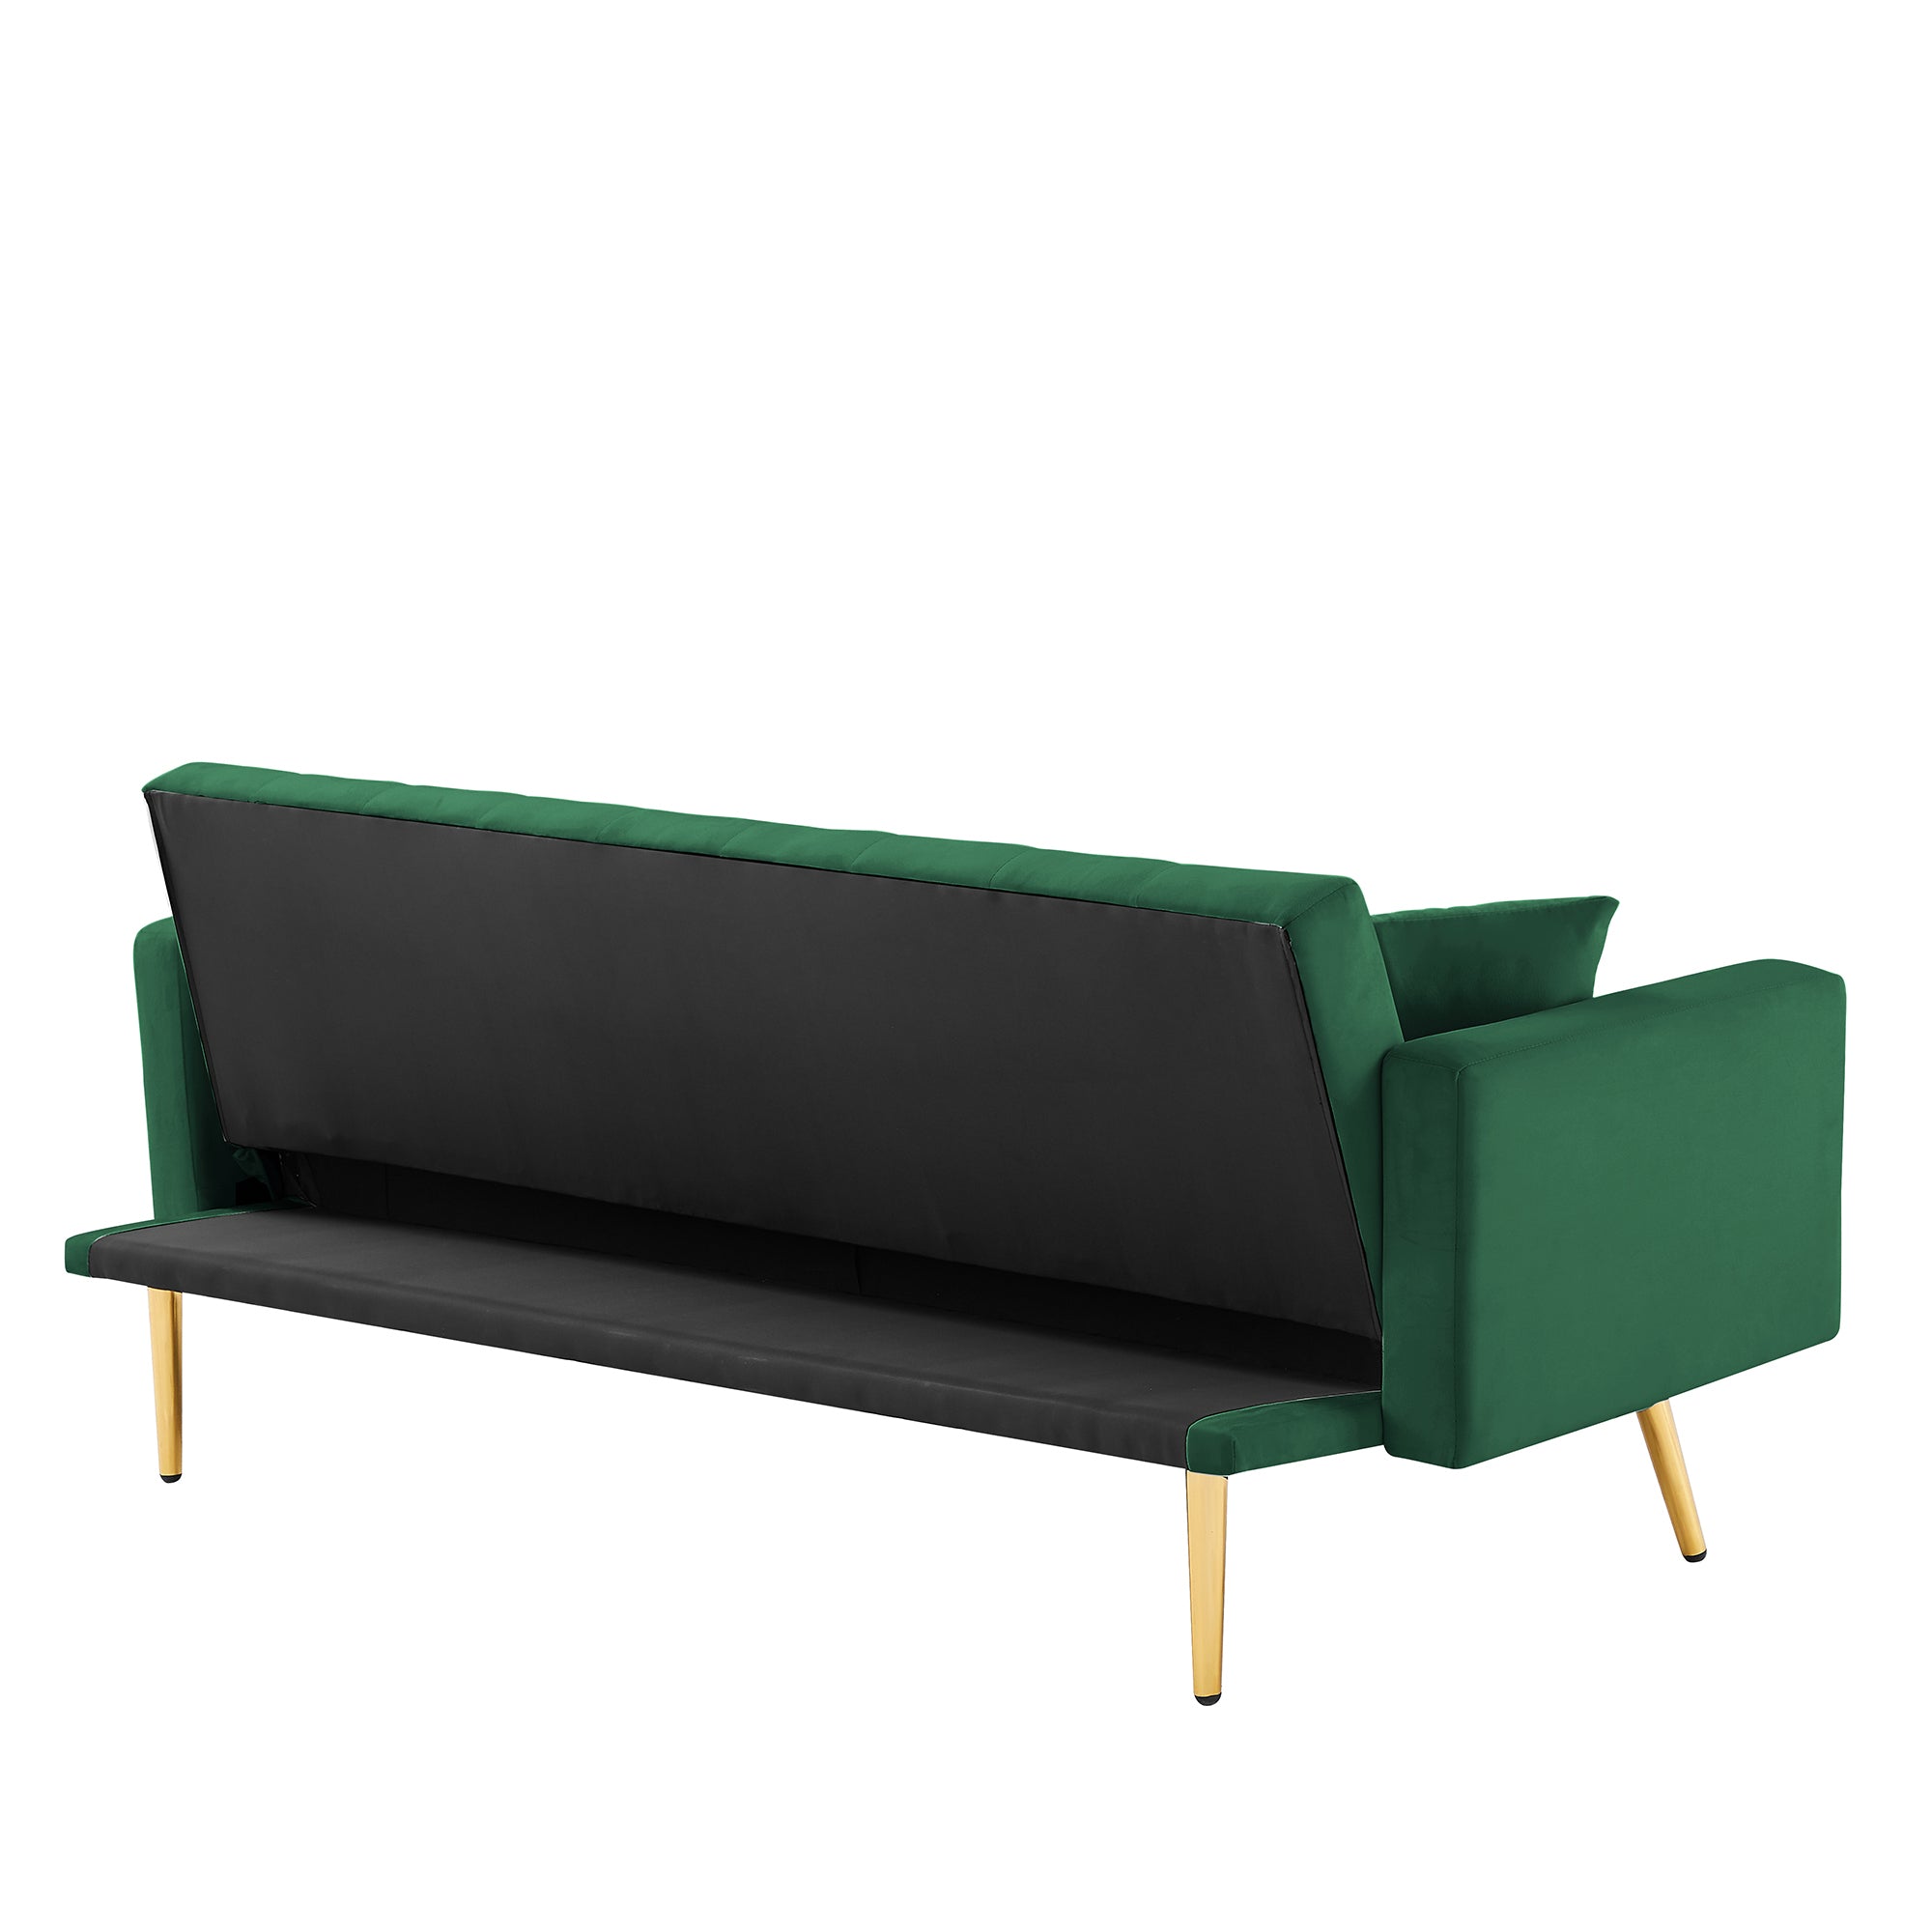 Convertible Folding Futon Sofa Bed (Green)